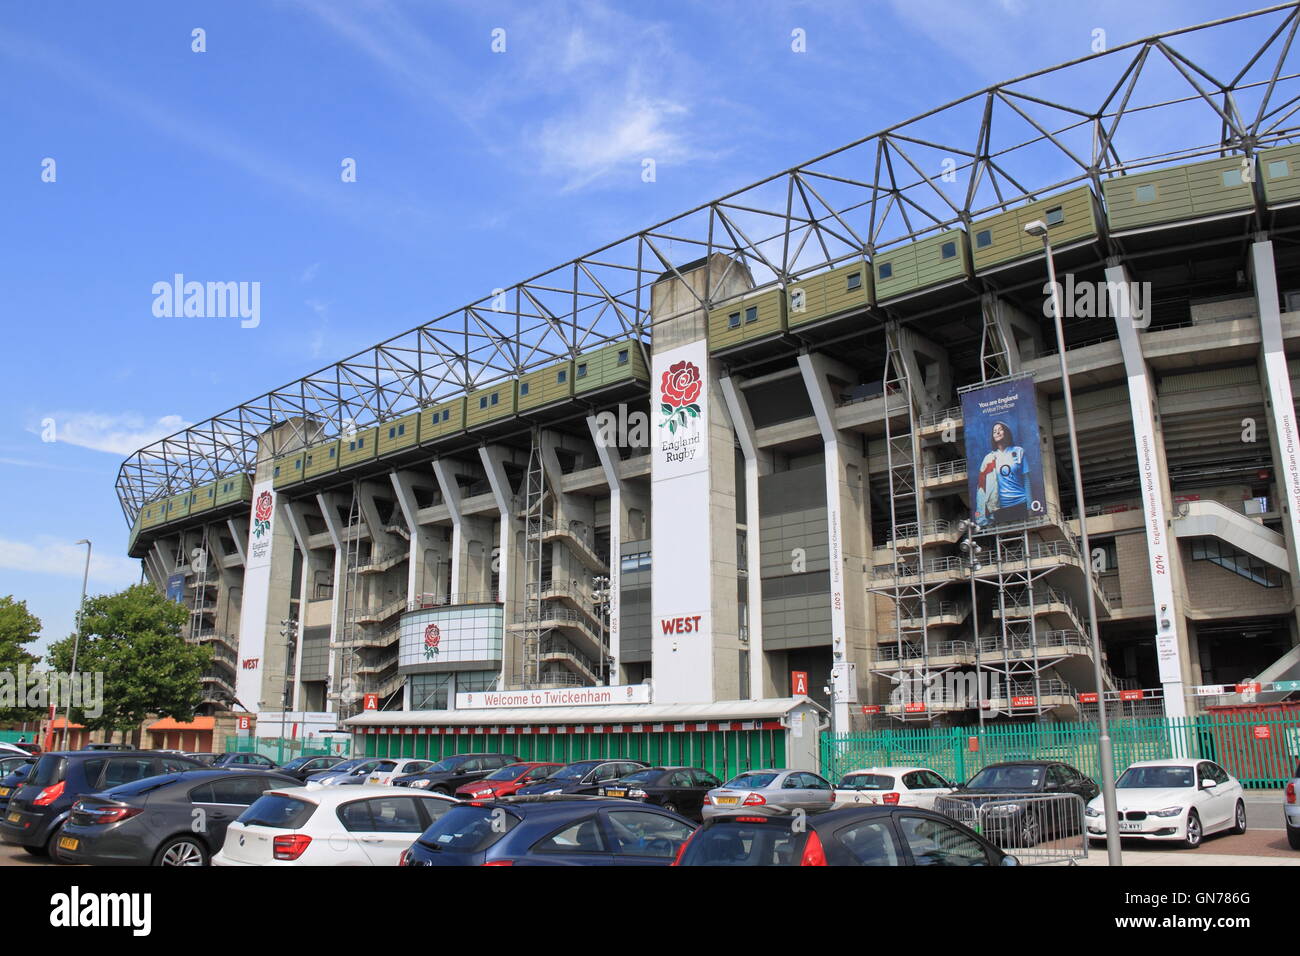 West Stand, Twickenham Stadium, Greater London, England, Great Britain, United Kingdom UK, Europe Stock Photo